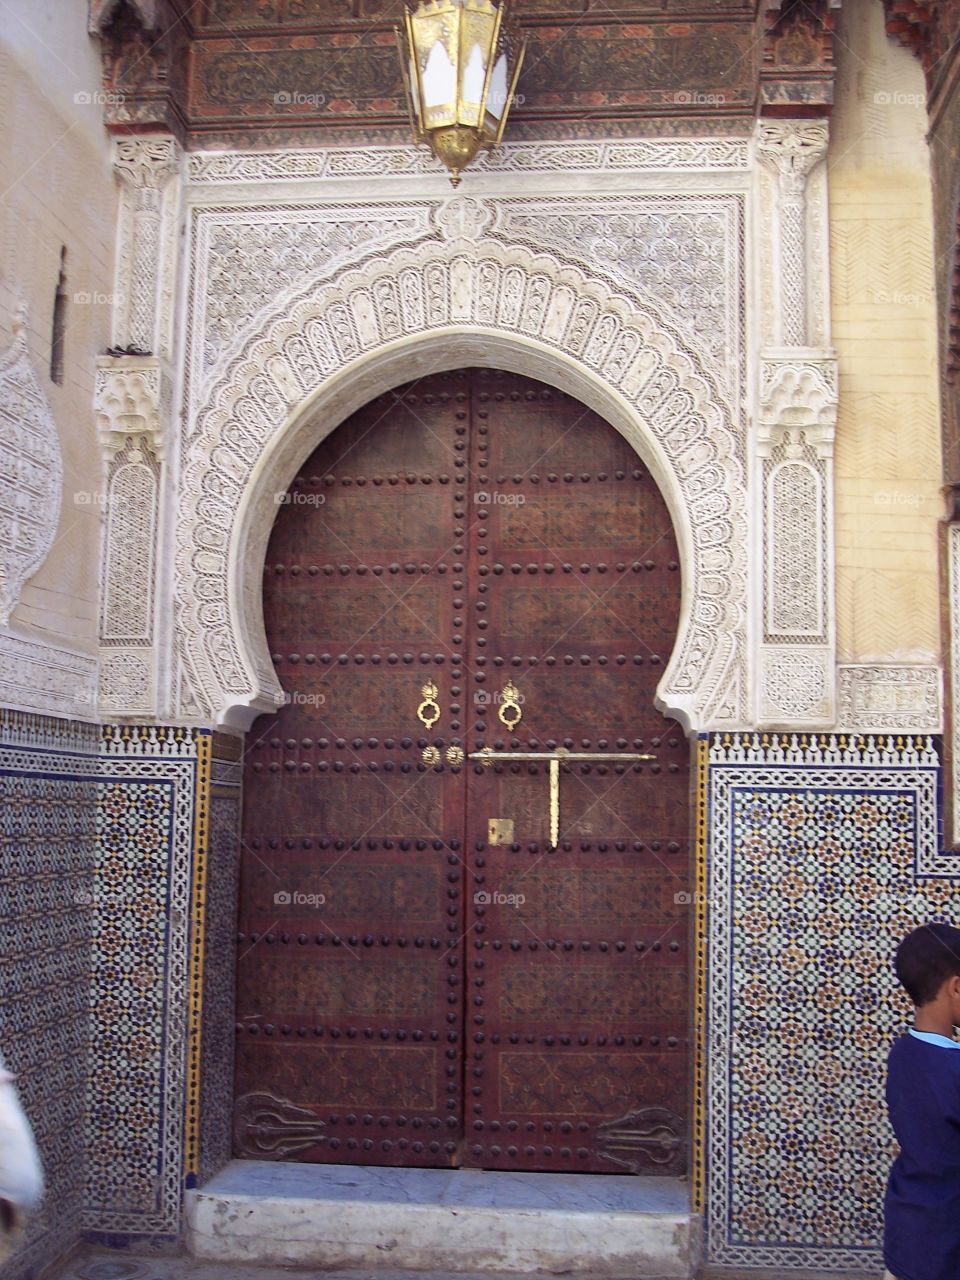  Morocco travel 